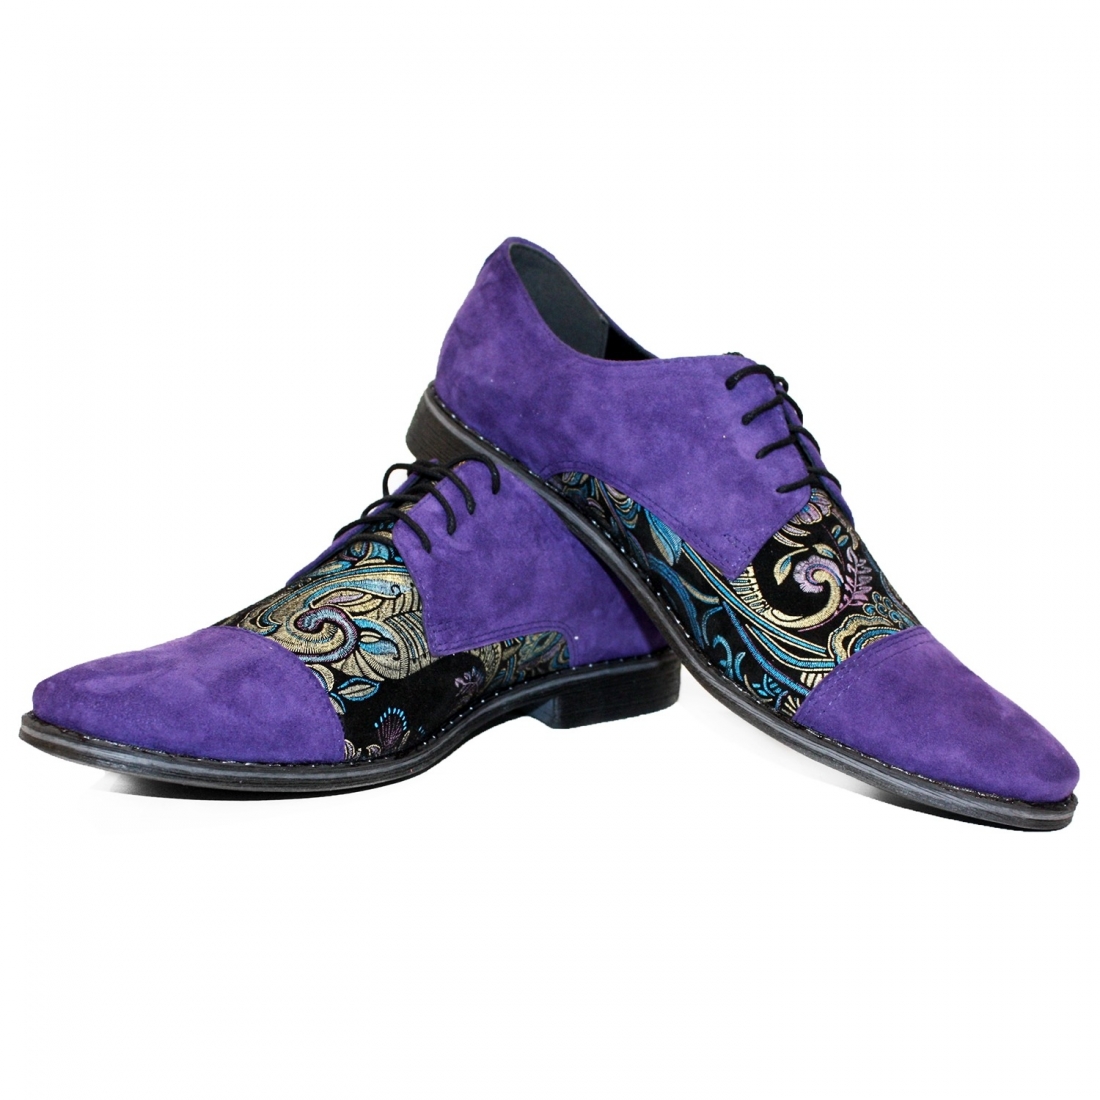 Modello Fioletto - Schnürer - Handmade Colorful Italian Leather Shoes